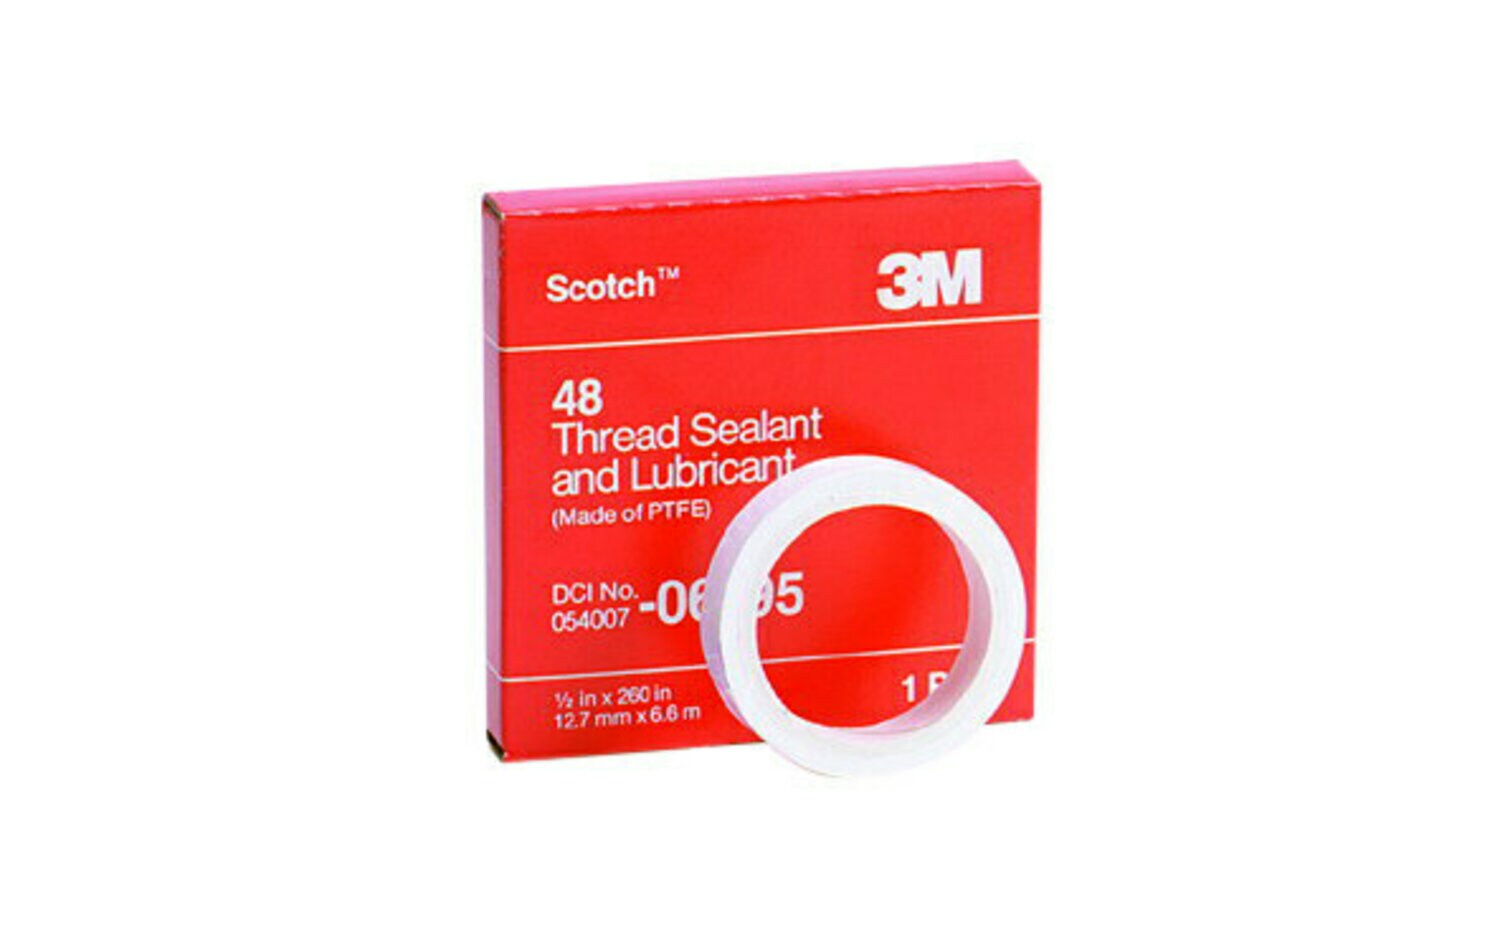 7000057504 - Scotch Thread Sealant and Lubricant 48, 1/2" x 520" in box, 12
Rolls/Case